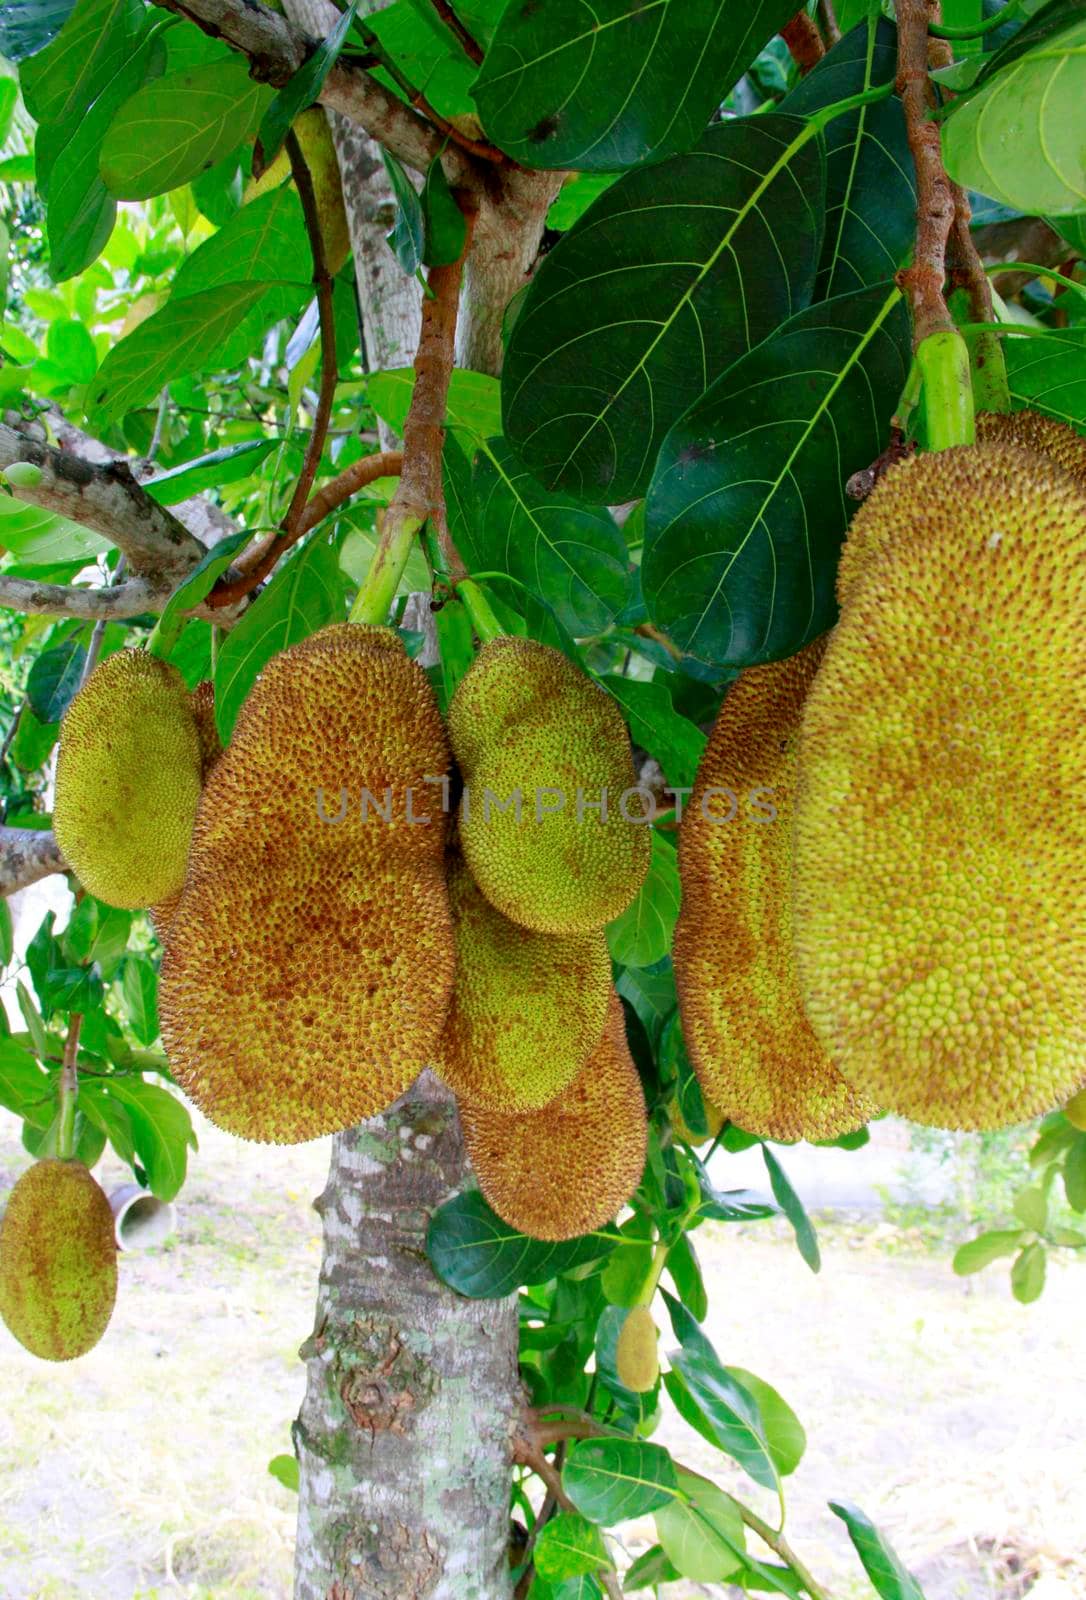 jackfruit in plantation in the city of salvador by joasouza